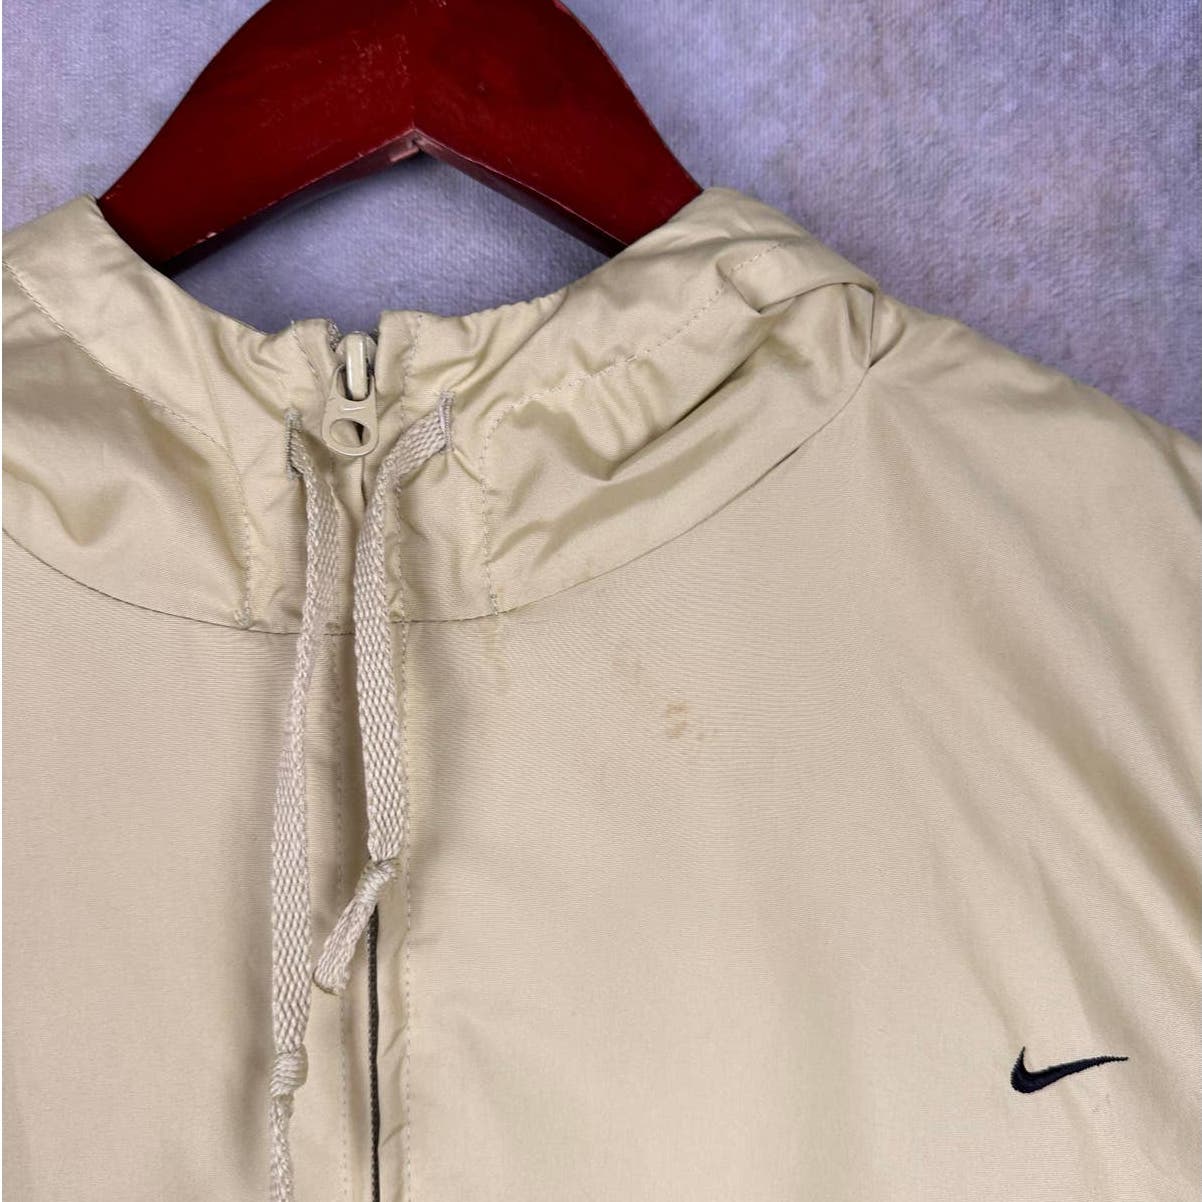 Vintage Nike Windbreaker Jacket Sz M